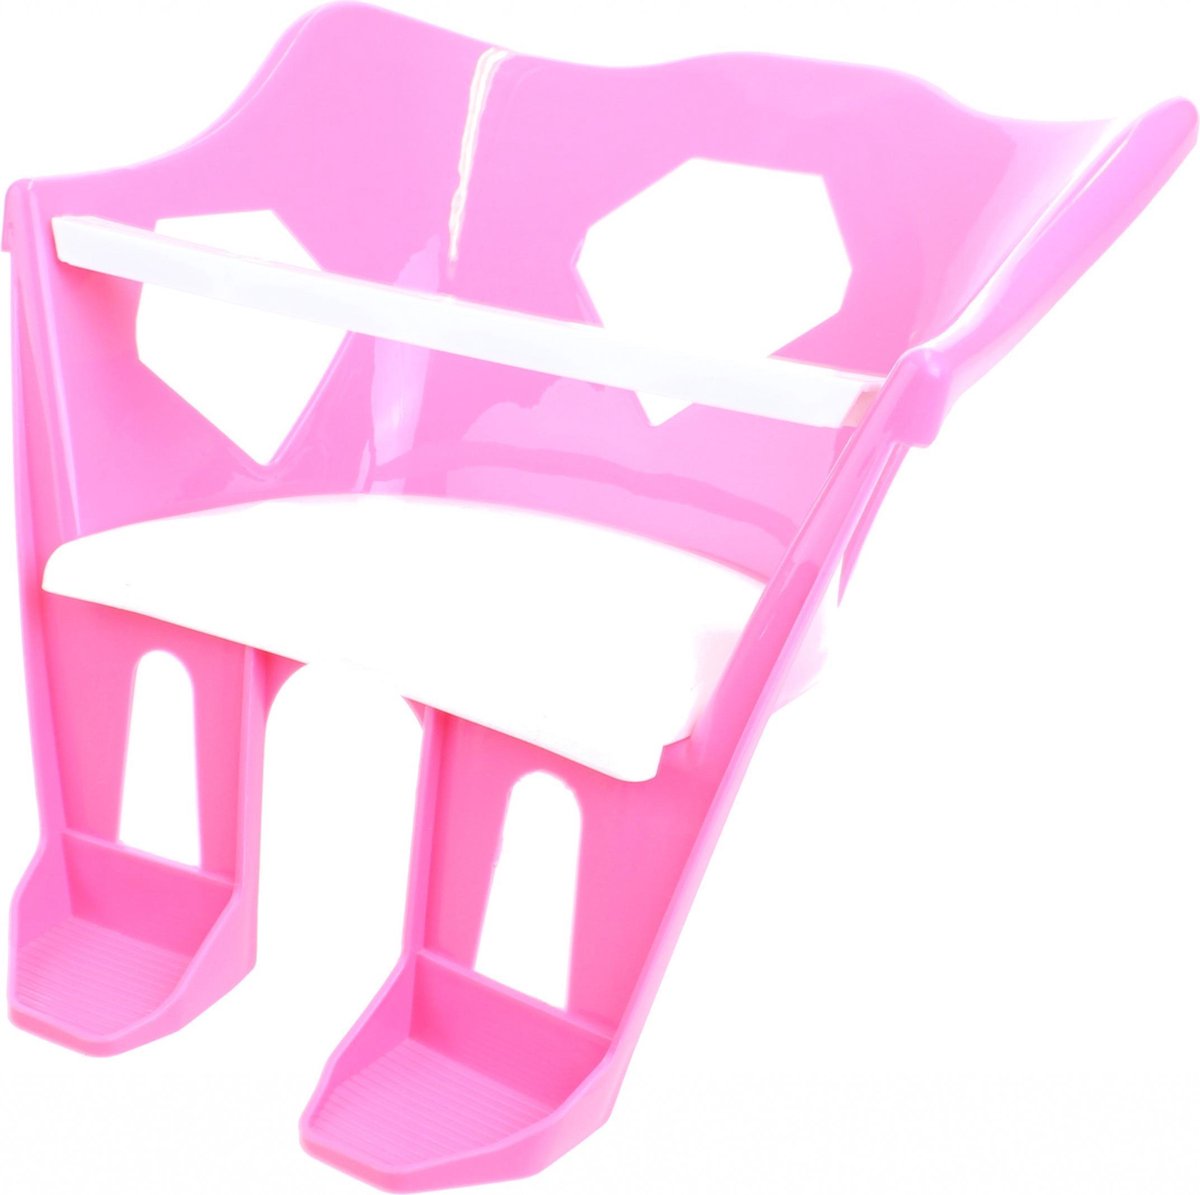 Top1Toys Toi Toys Fietszitje voor babypoppen 24 x 18 cm - Roze